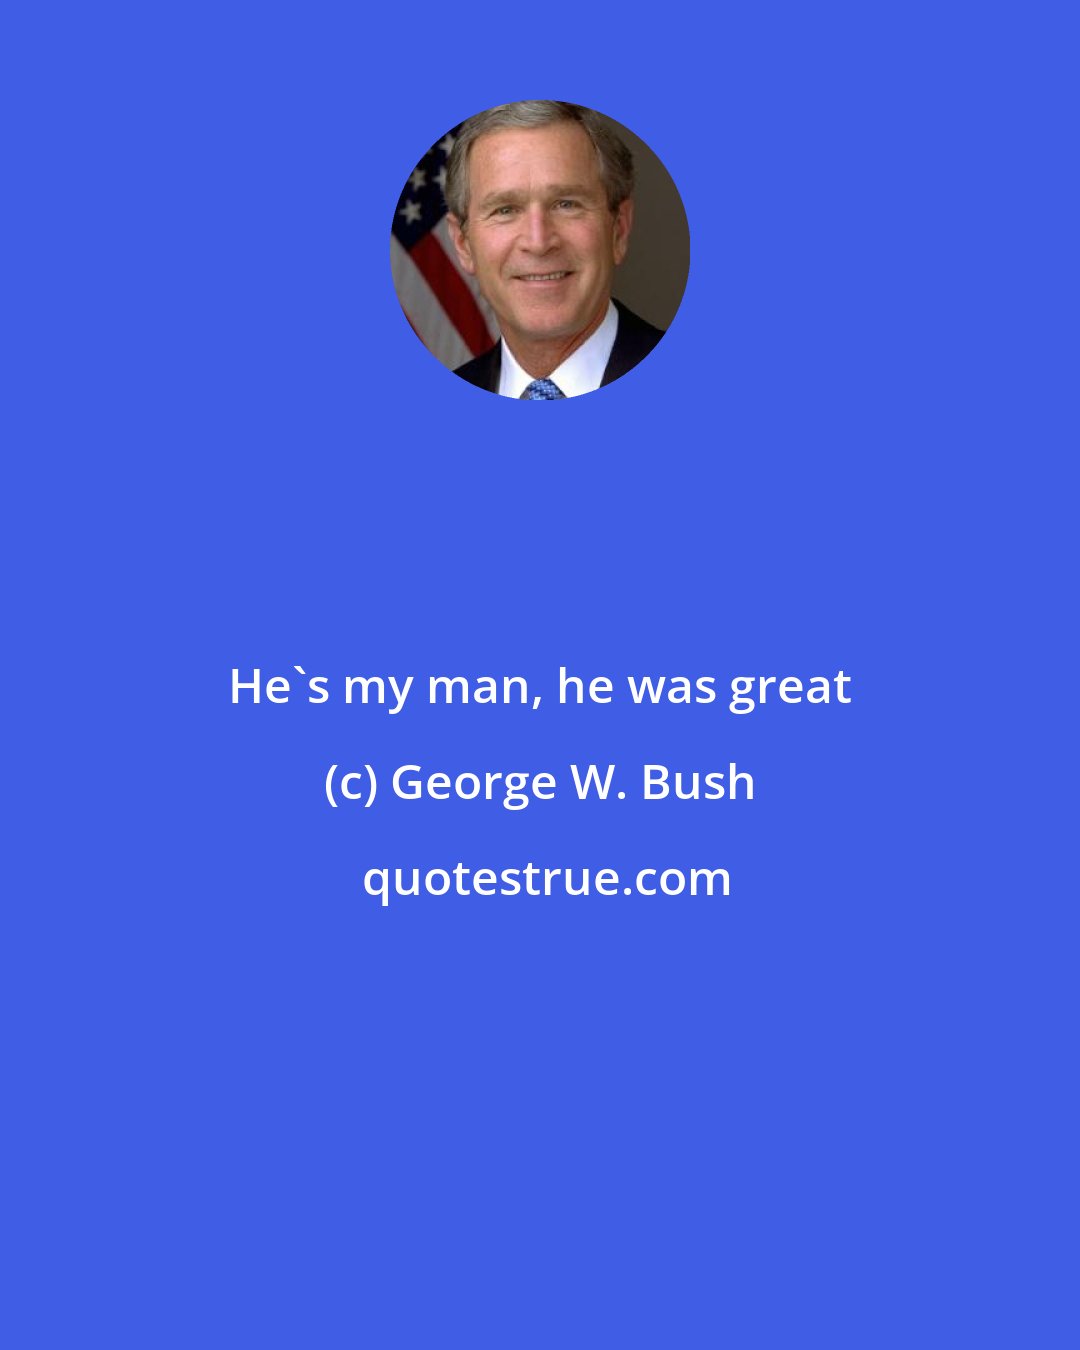 George W. Bush: He's my man, he was great